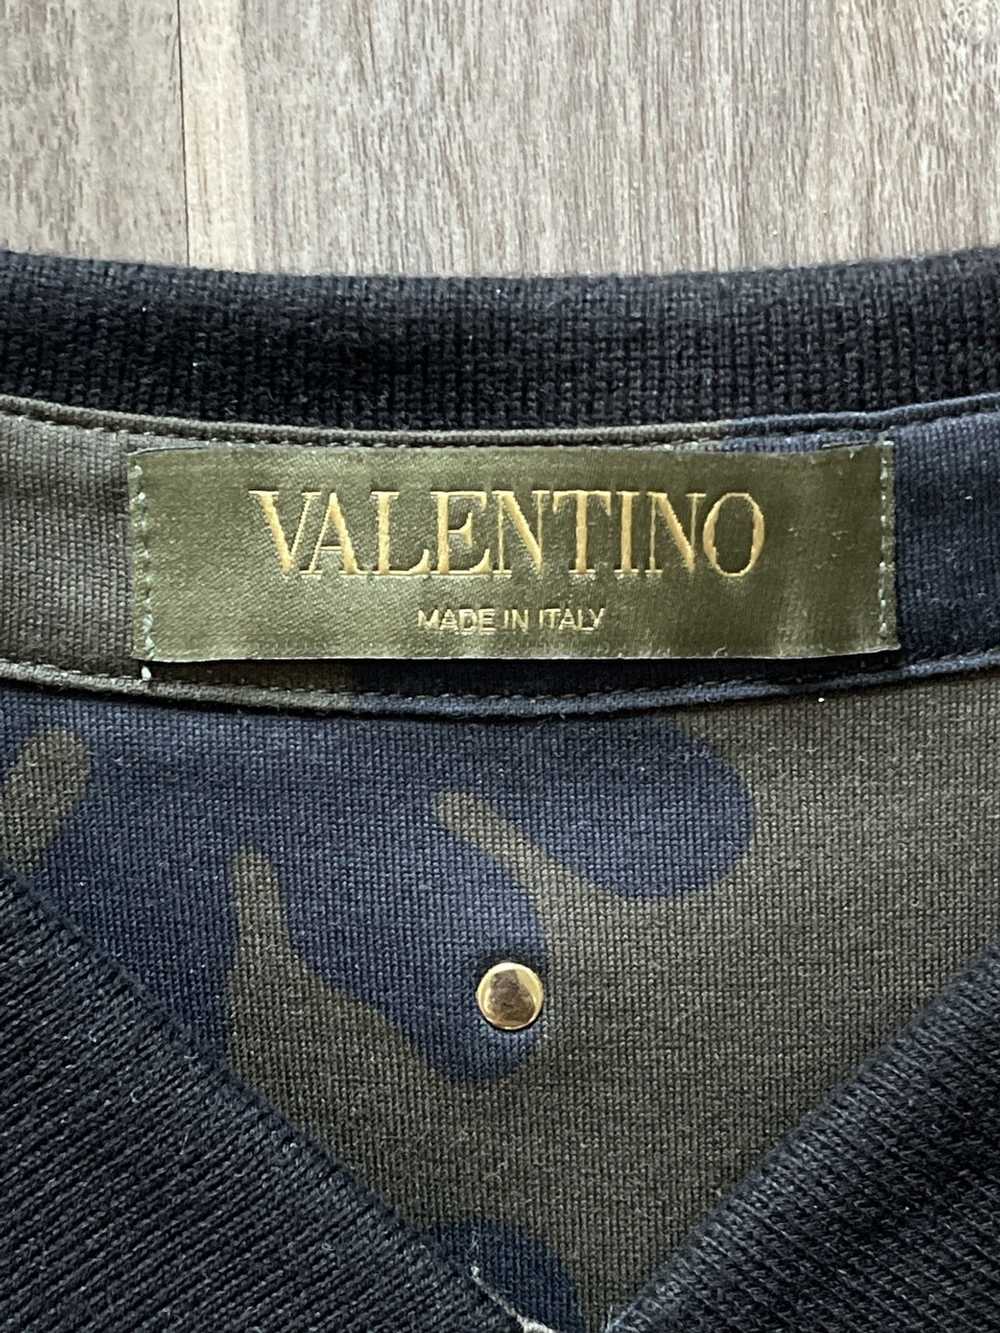 Valentino Valentino “Camouflage” polo shirt - image 2